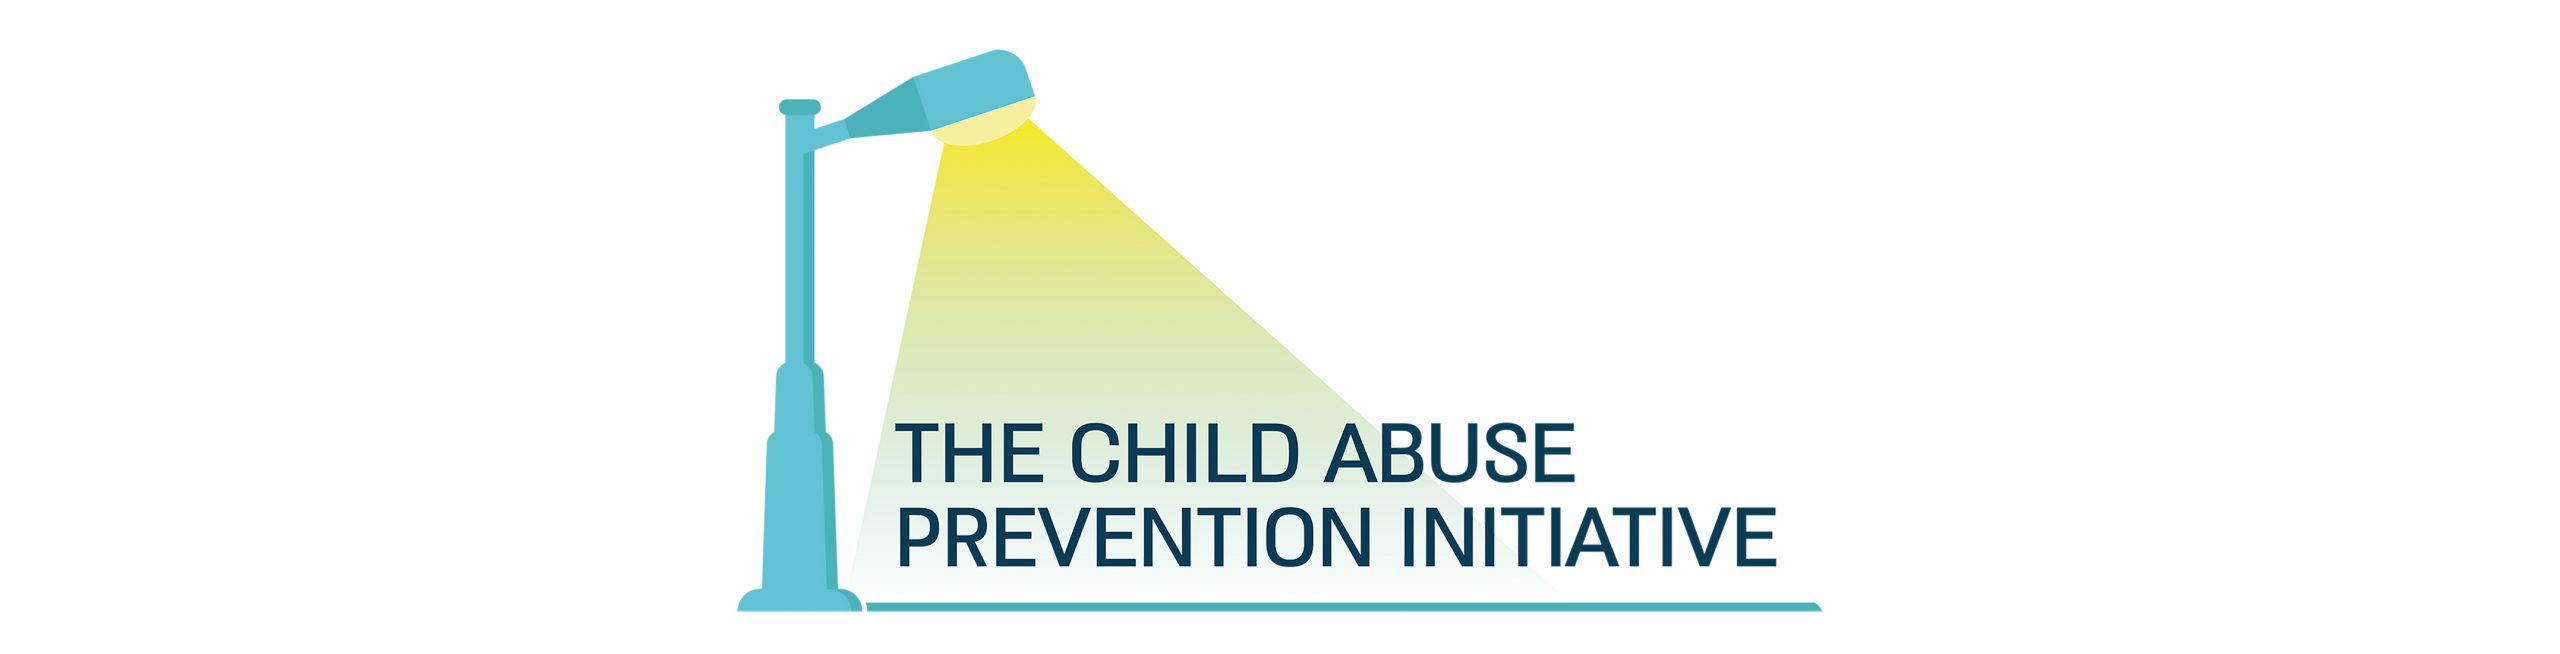 The child abuse prevention initiative